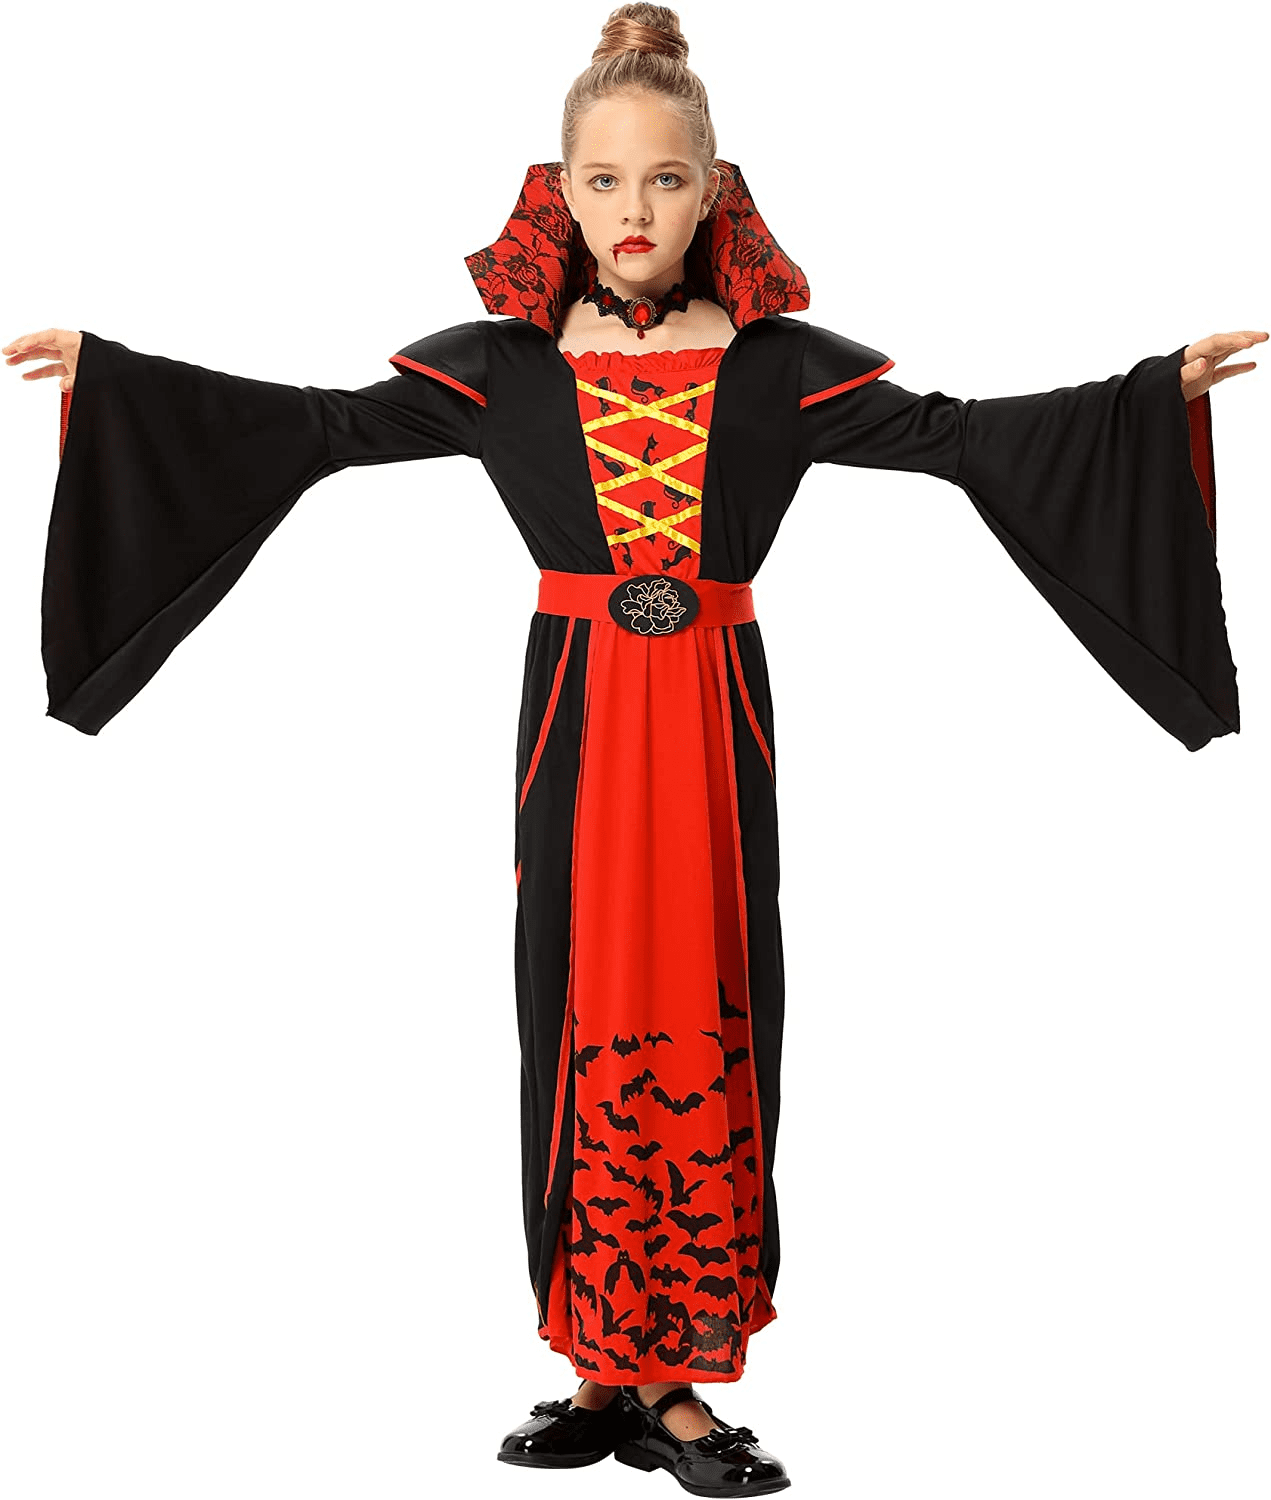 Royal Vampire Costume Set for Girls Halloween Dress Up Party, Vampiress ...